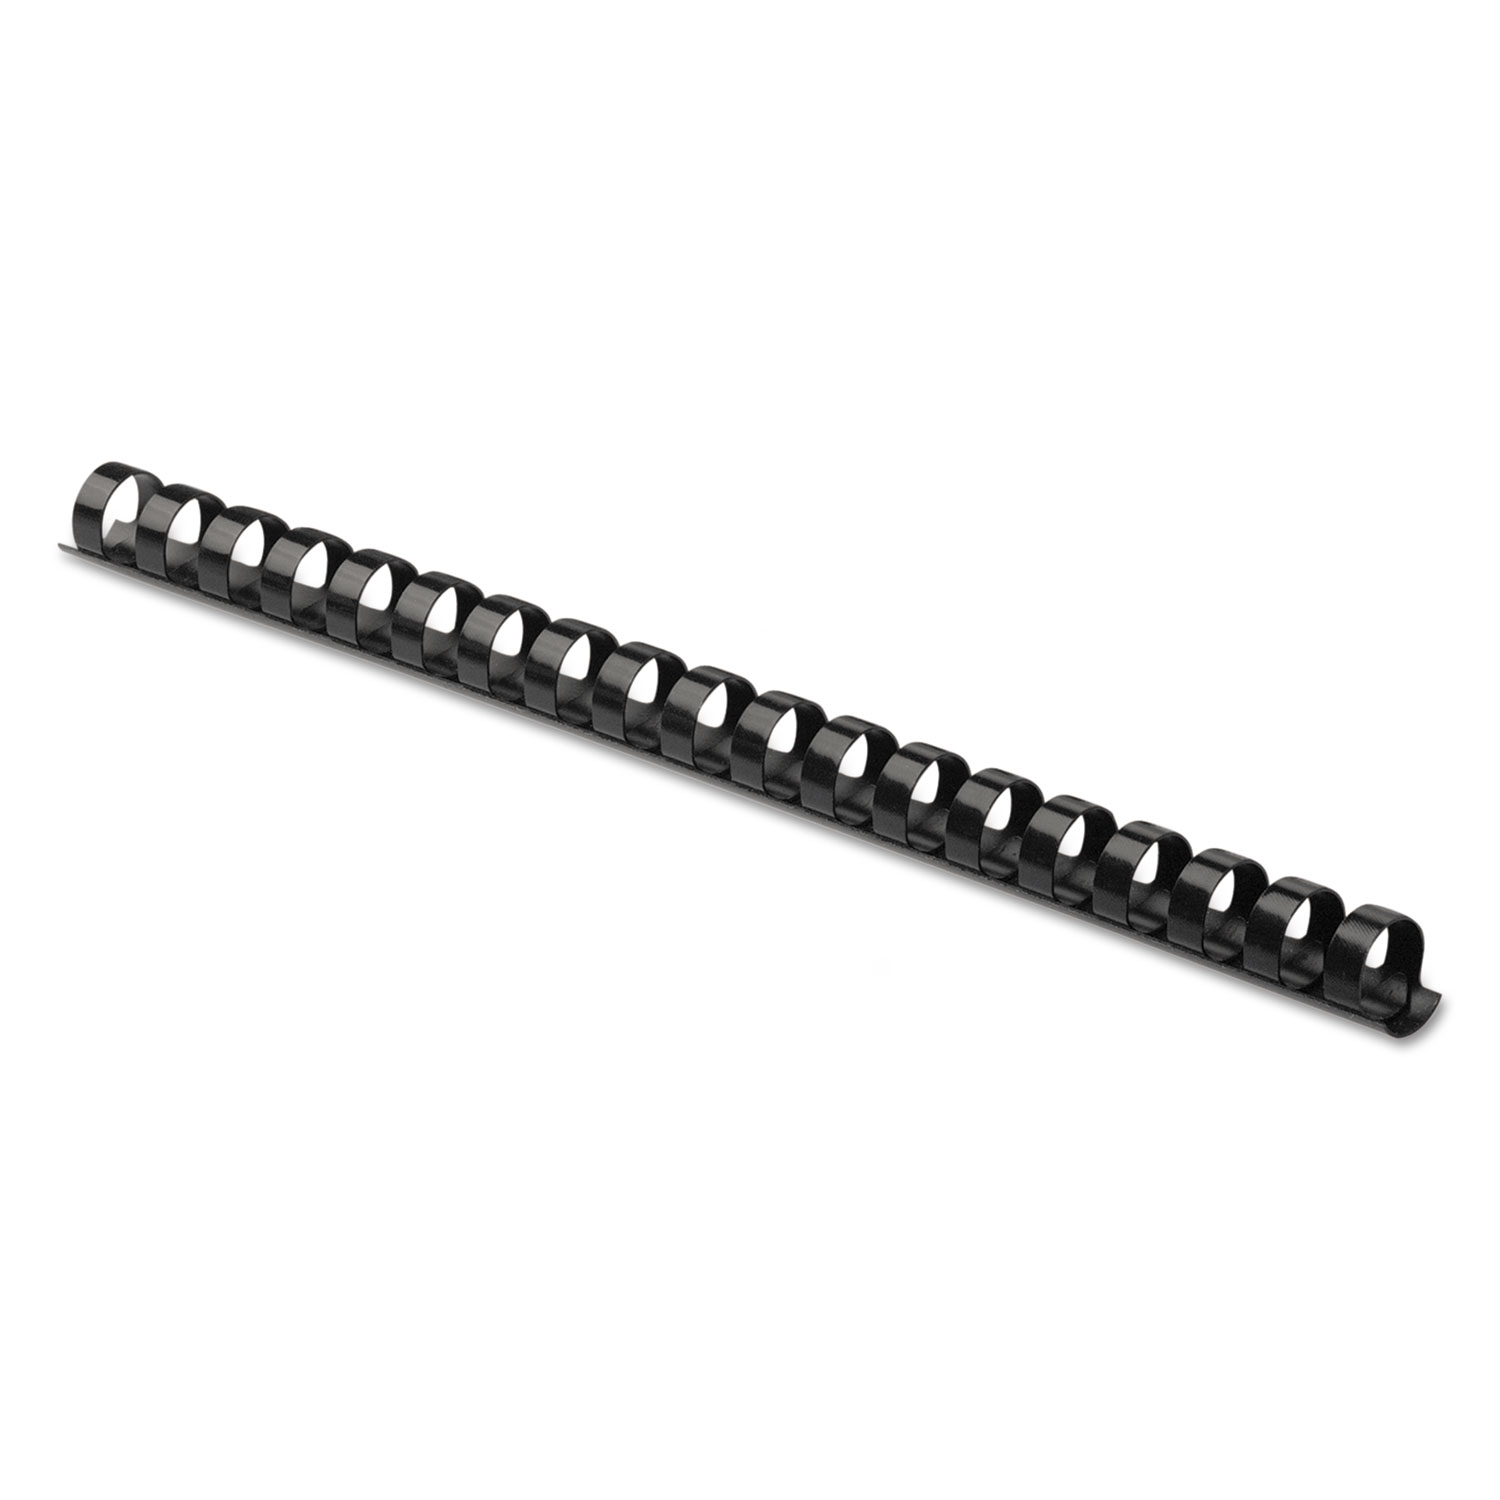  Fellowes 52326 Plastic Comb Bindings, 1/2 Diameter, 90 Sheet Capacity, Black, 100 Combs/Pack (FEL52326) 